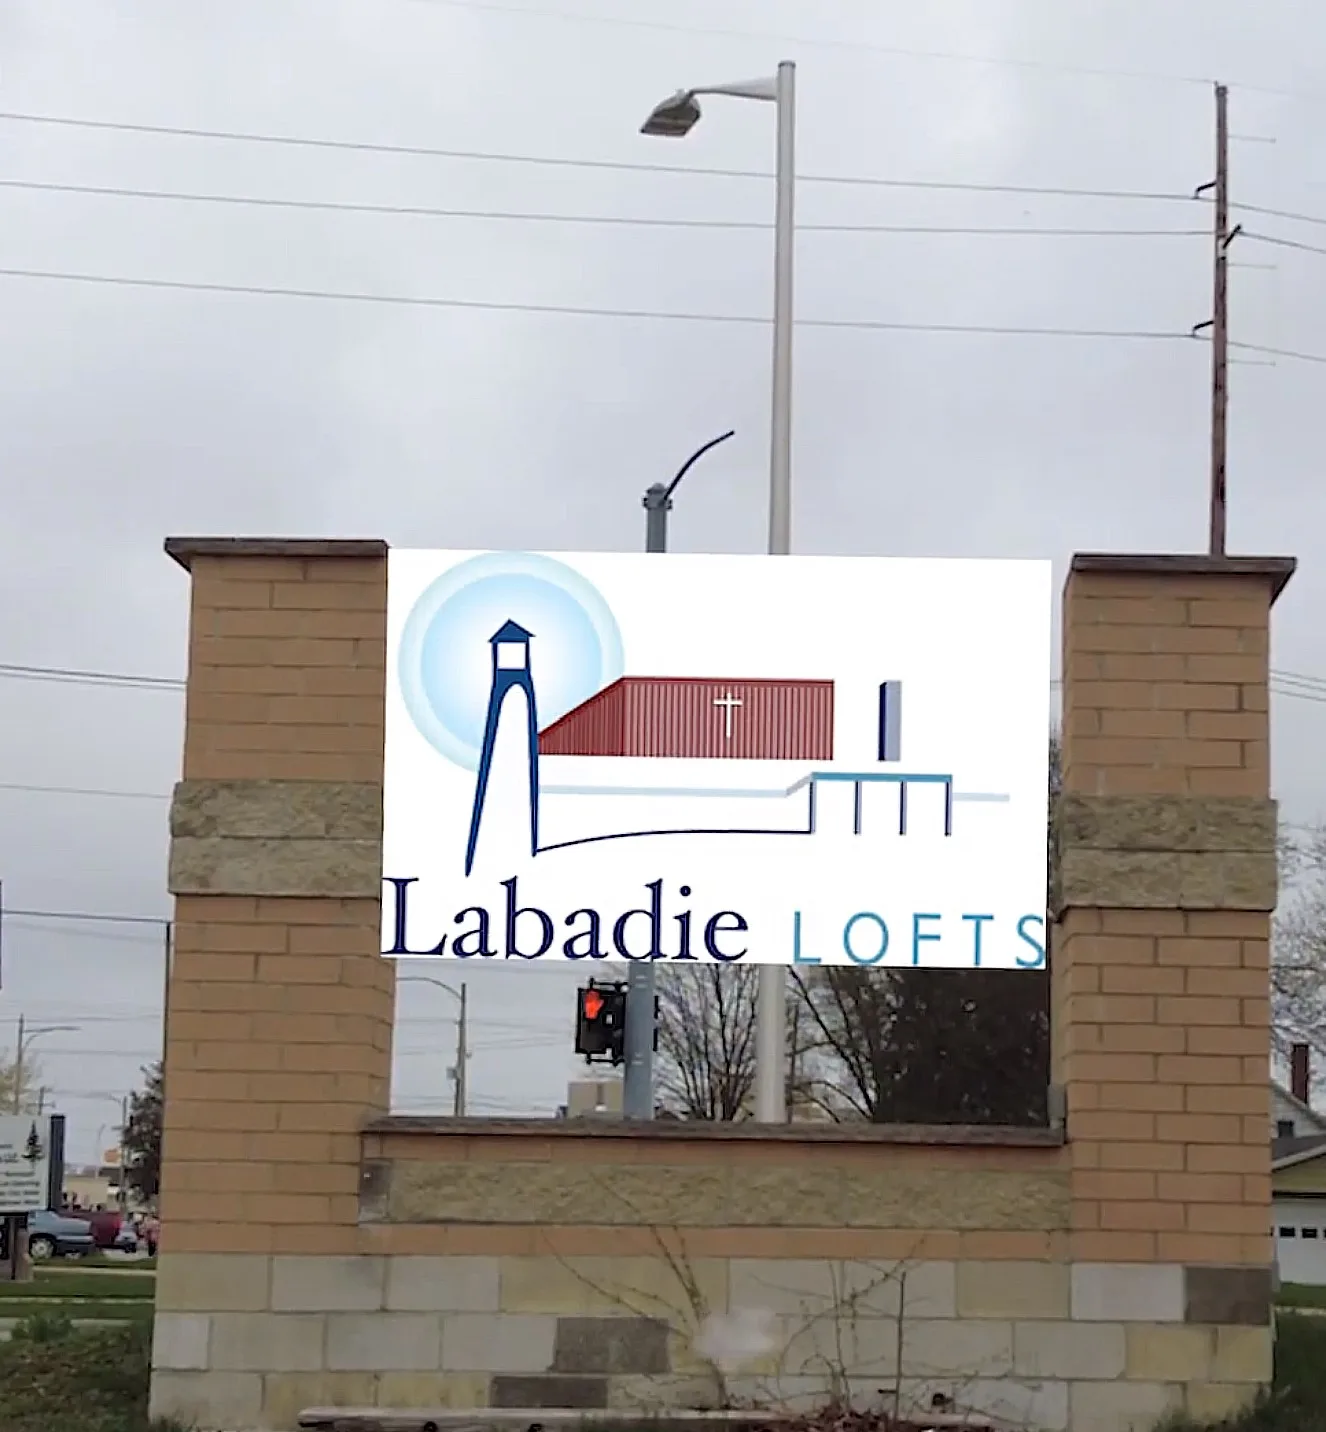 Labadie Lofts' signage.